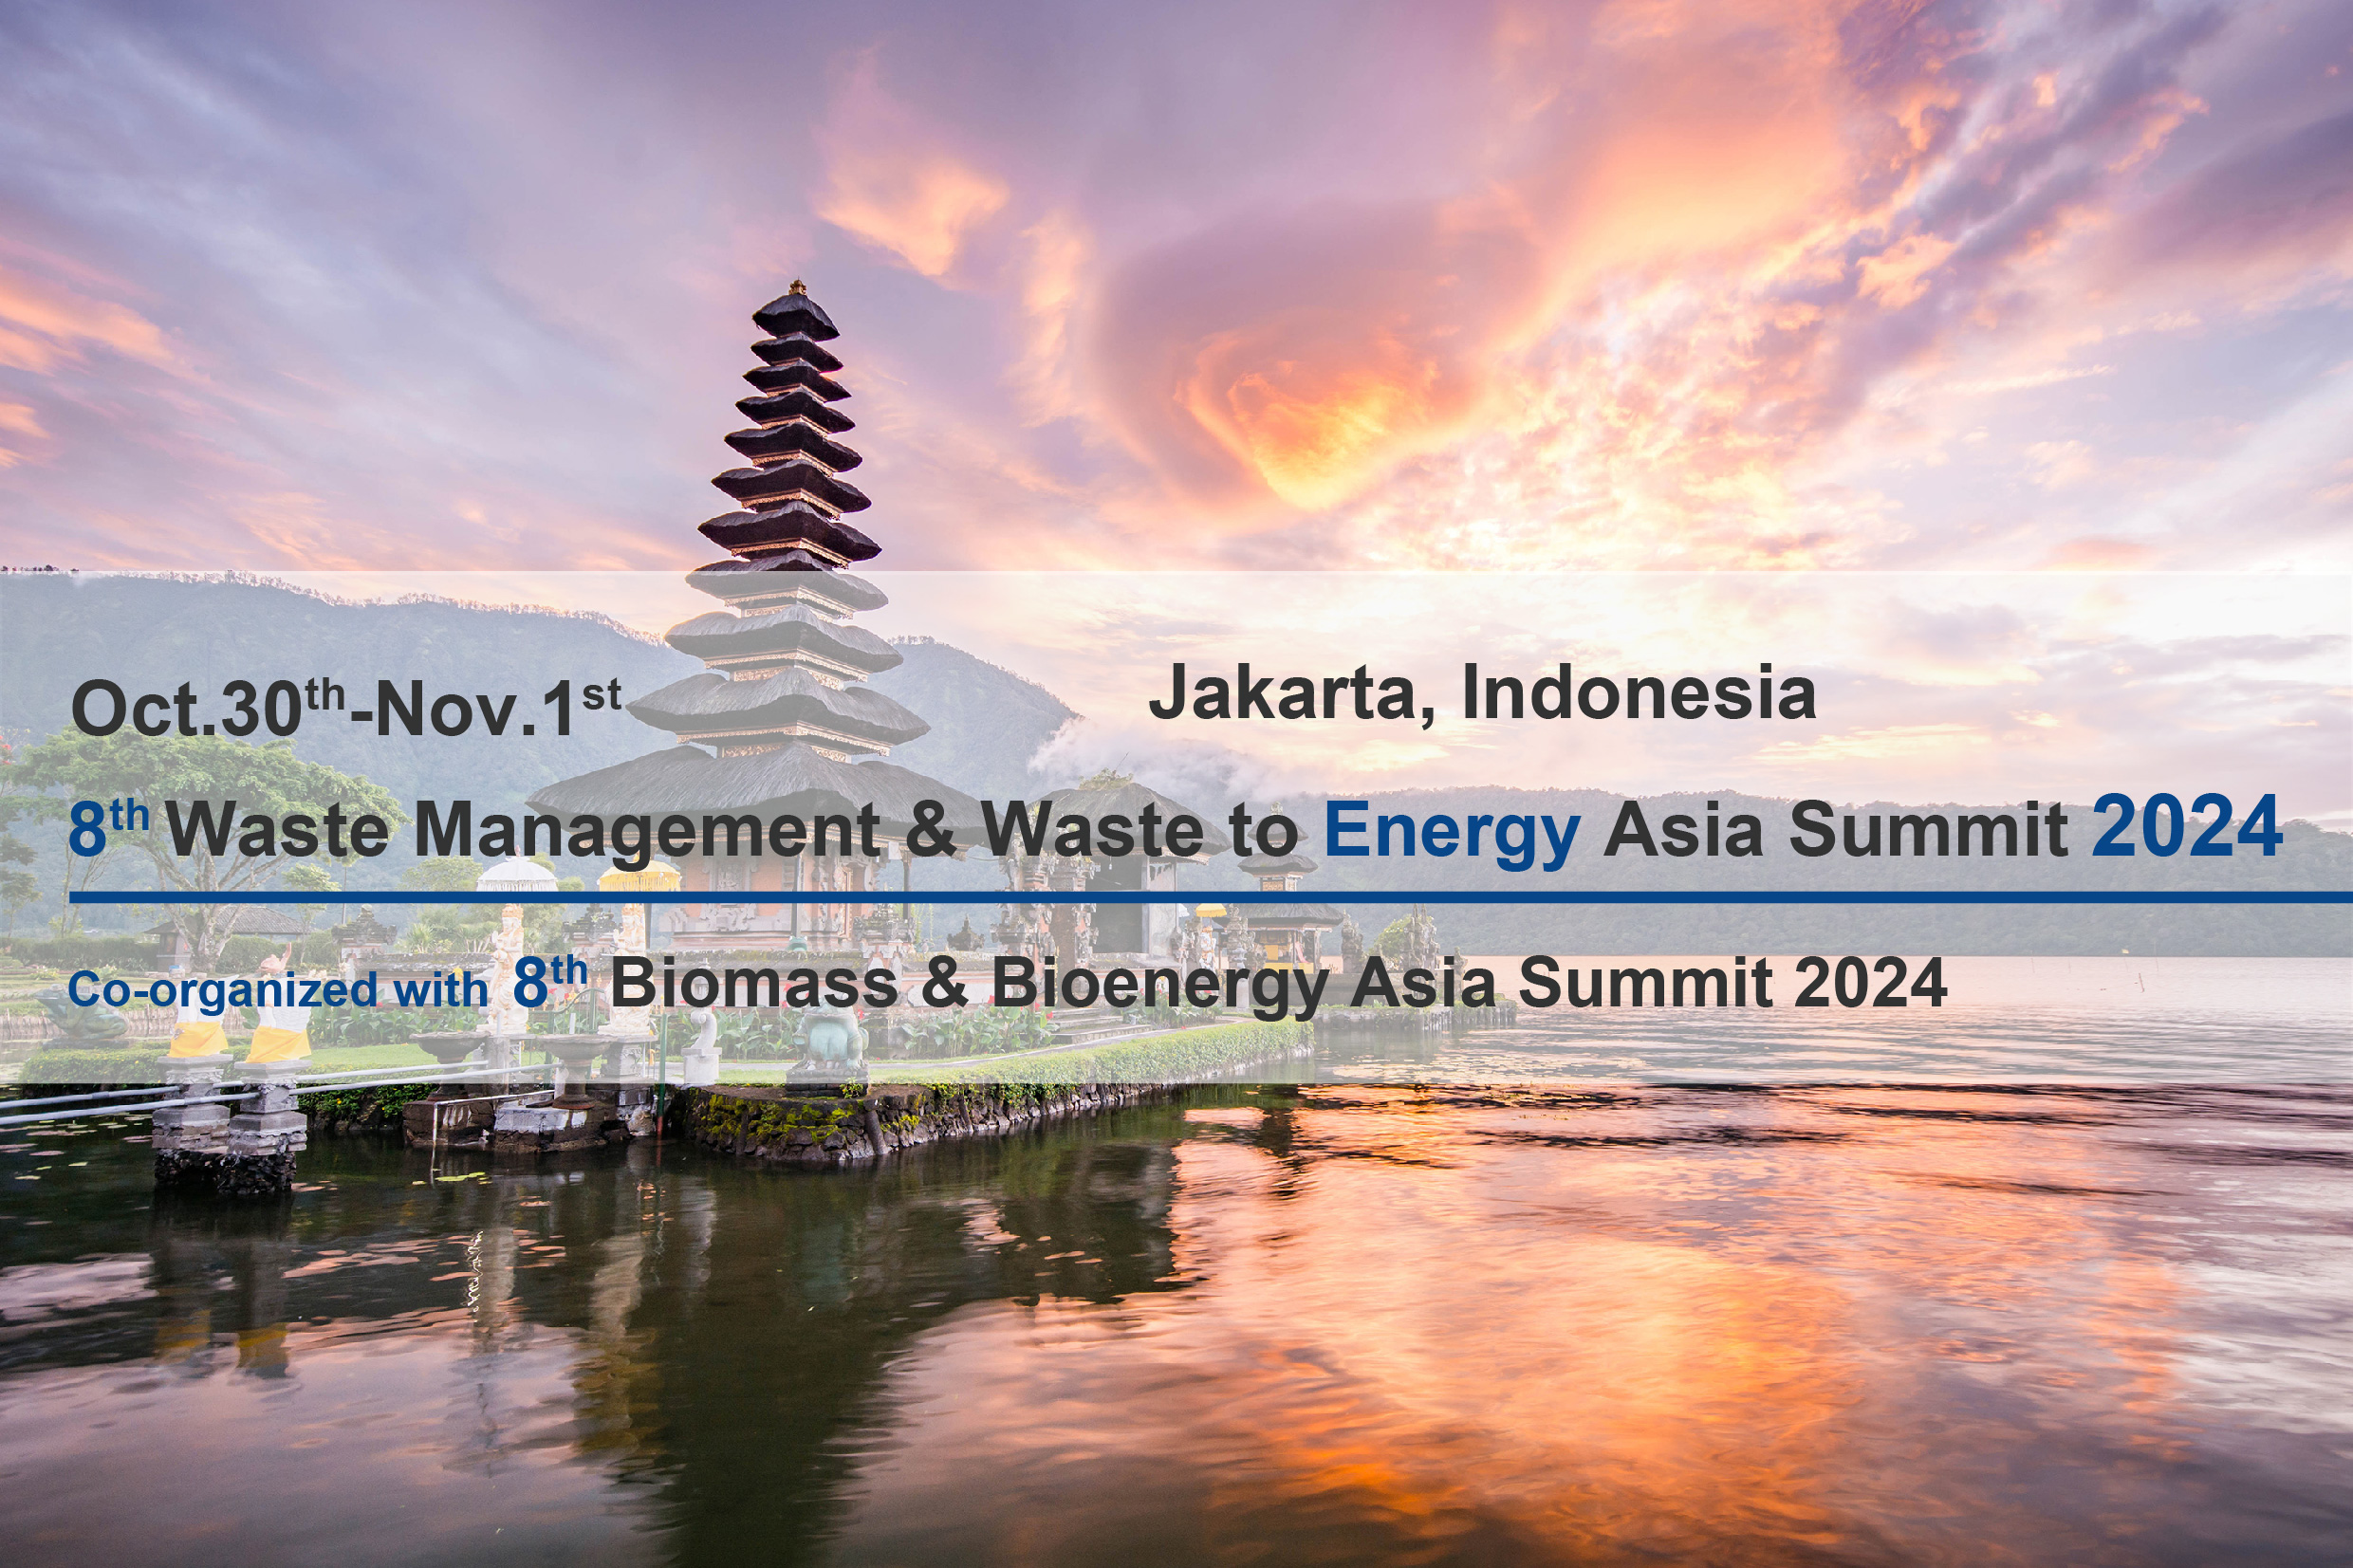 Waste to Energy Asia Summit 2024 Indonesia Focus